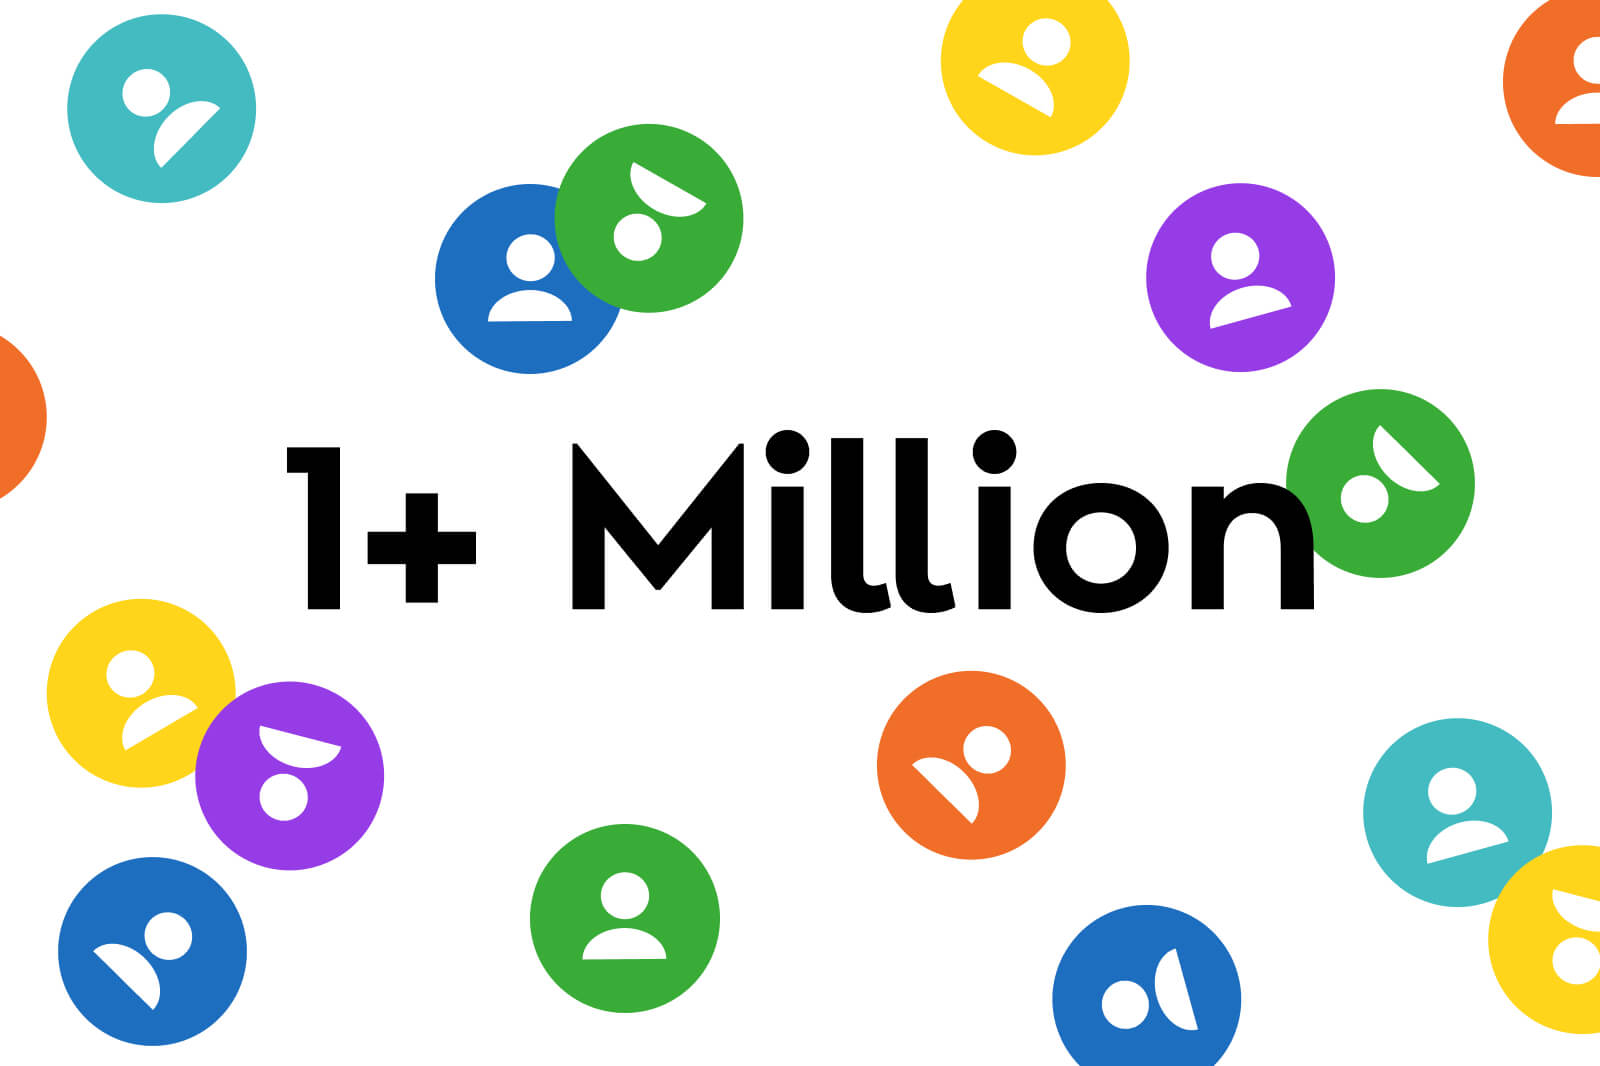 slido blog 1 million participants header